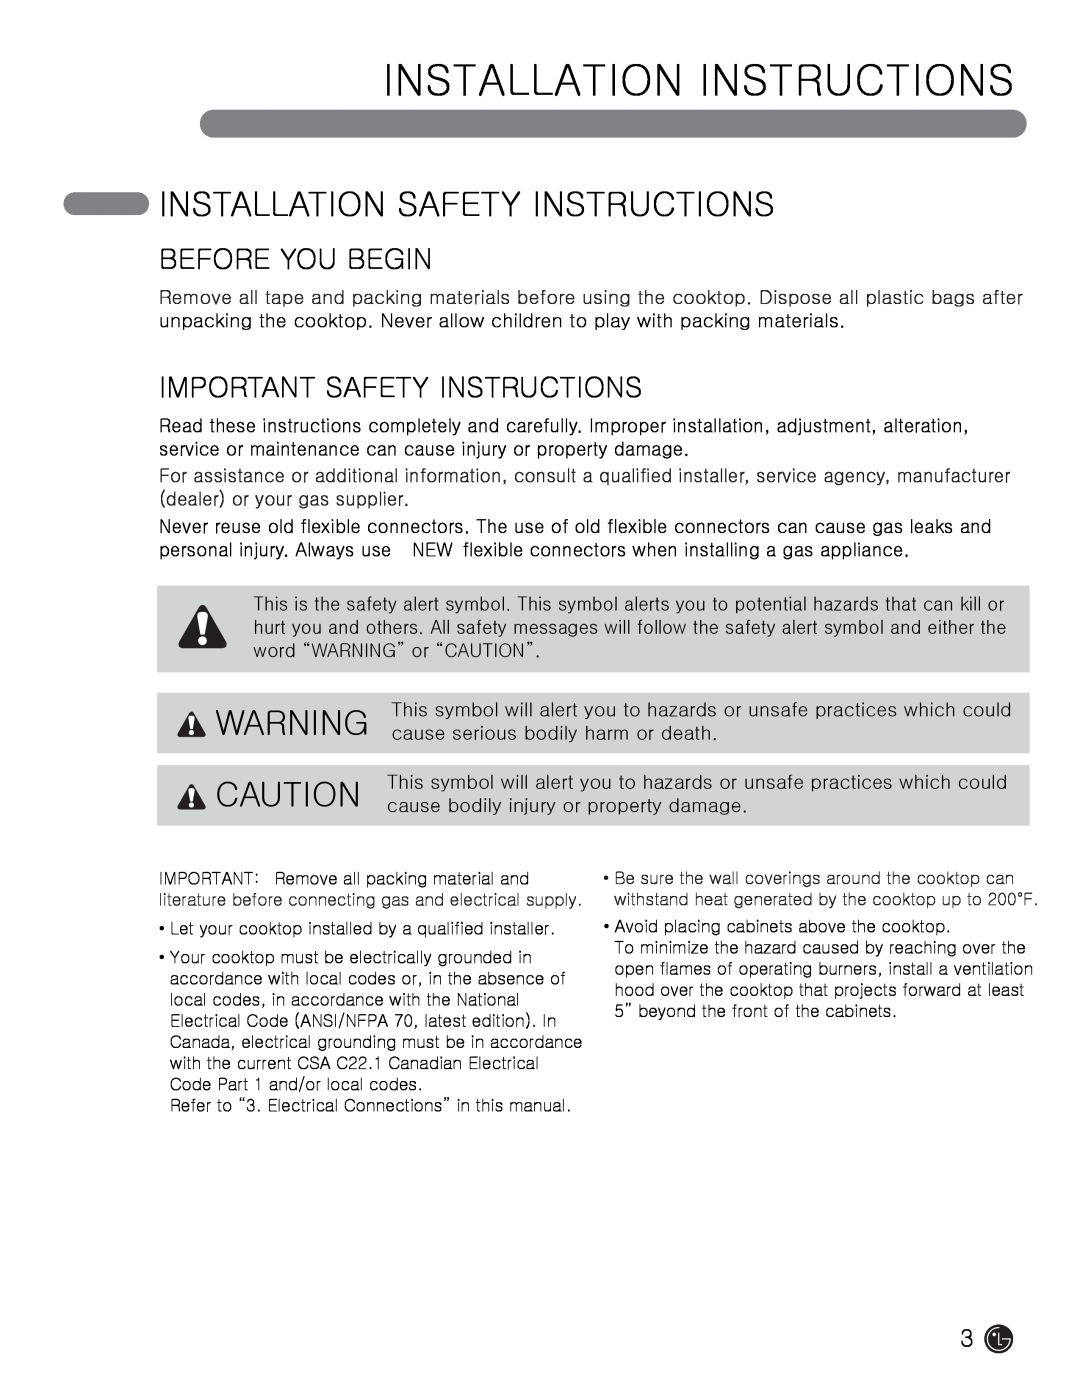 LG Electronics MFL62725501 Installation Safety Instructions, Installation Instructions, Before You Begin 